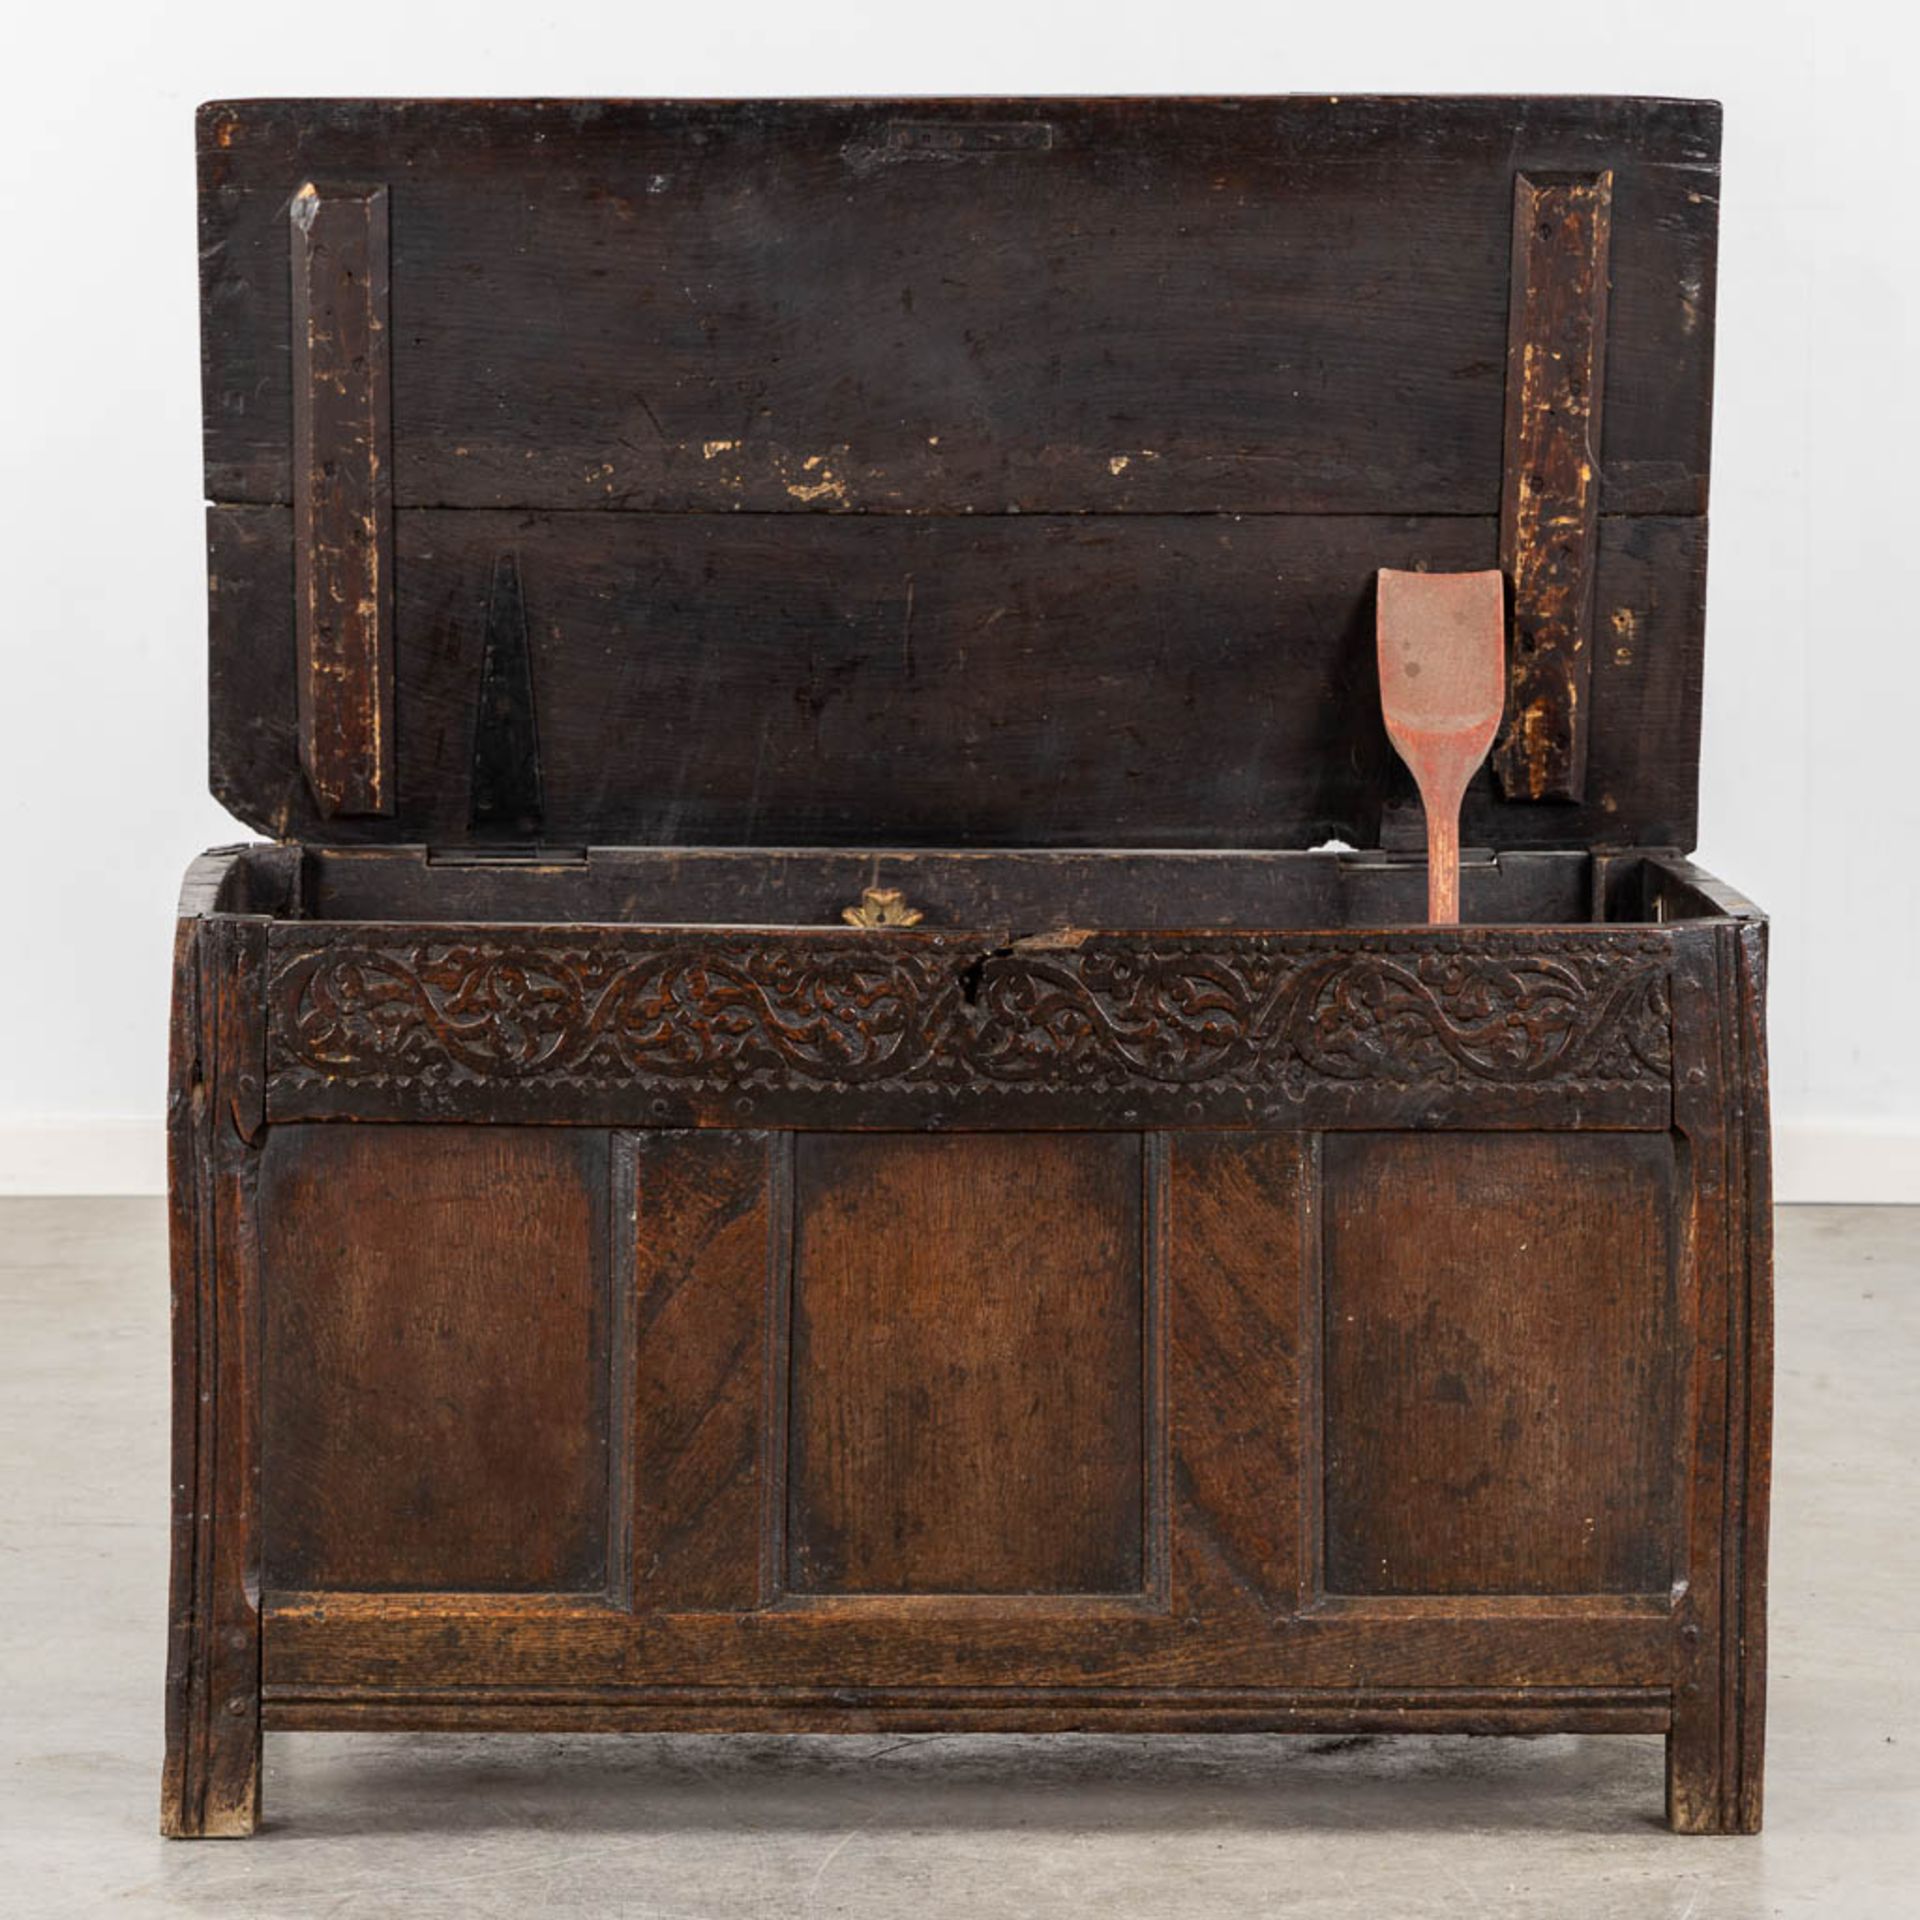 An antique wood-sculptured chest, 18th C. (L:52 x W:98 x H:56 cm) - Bild 4 aus 9